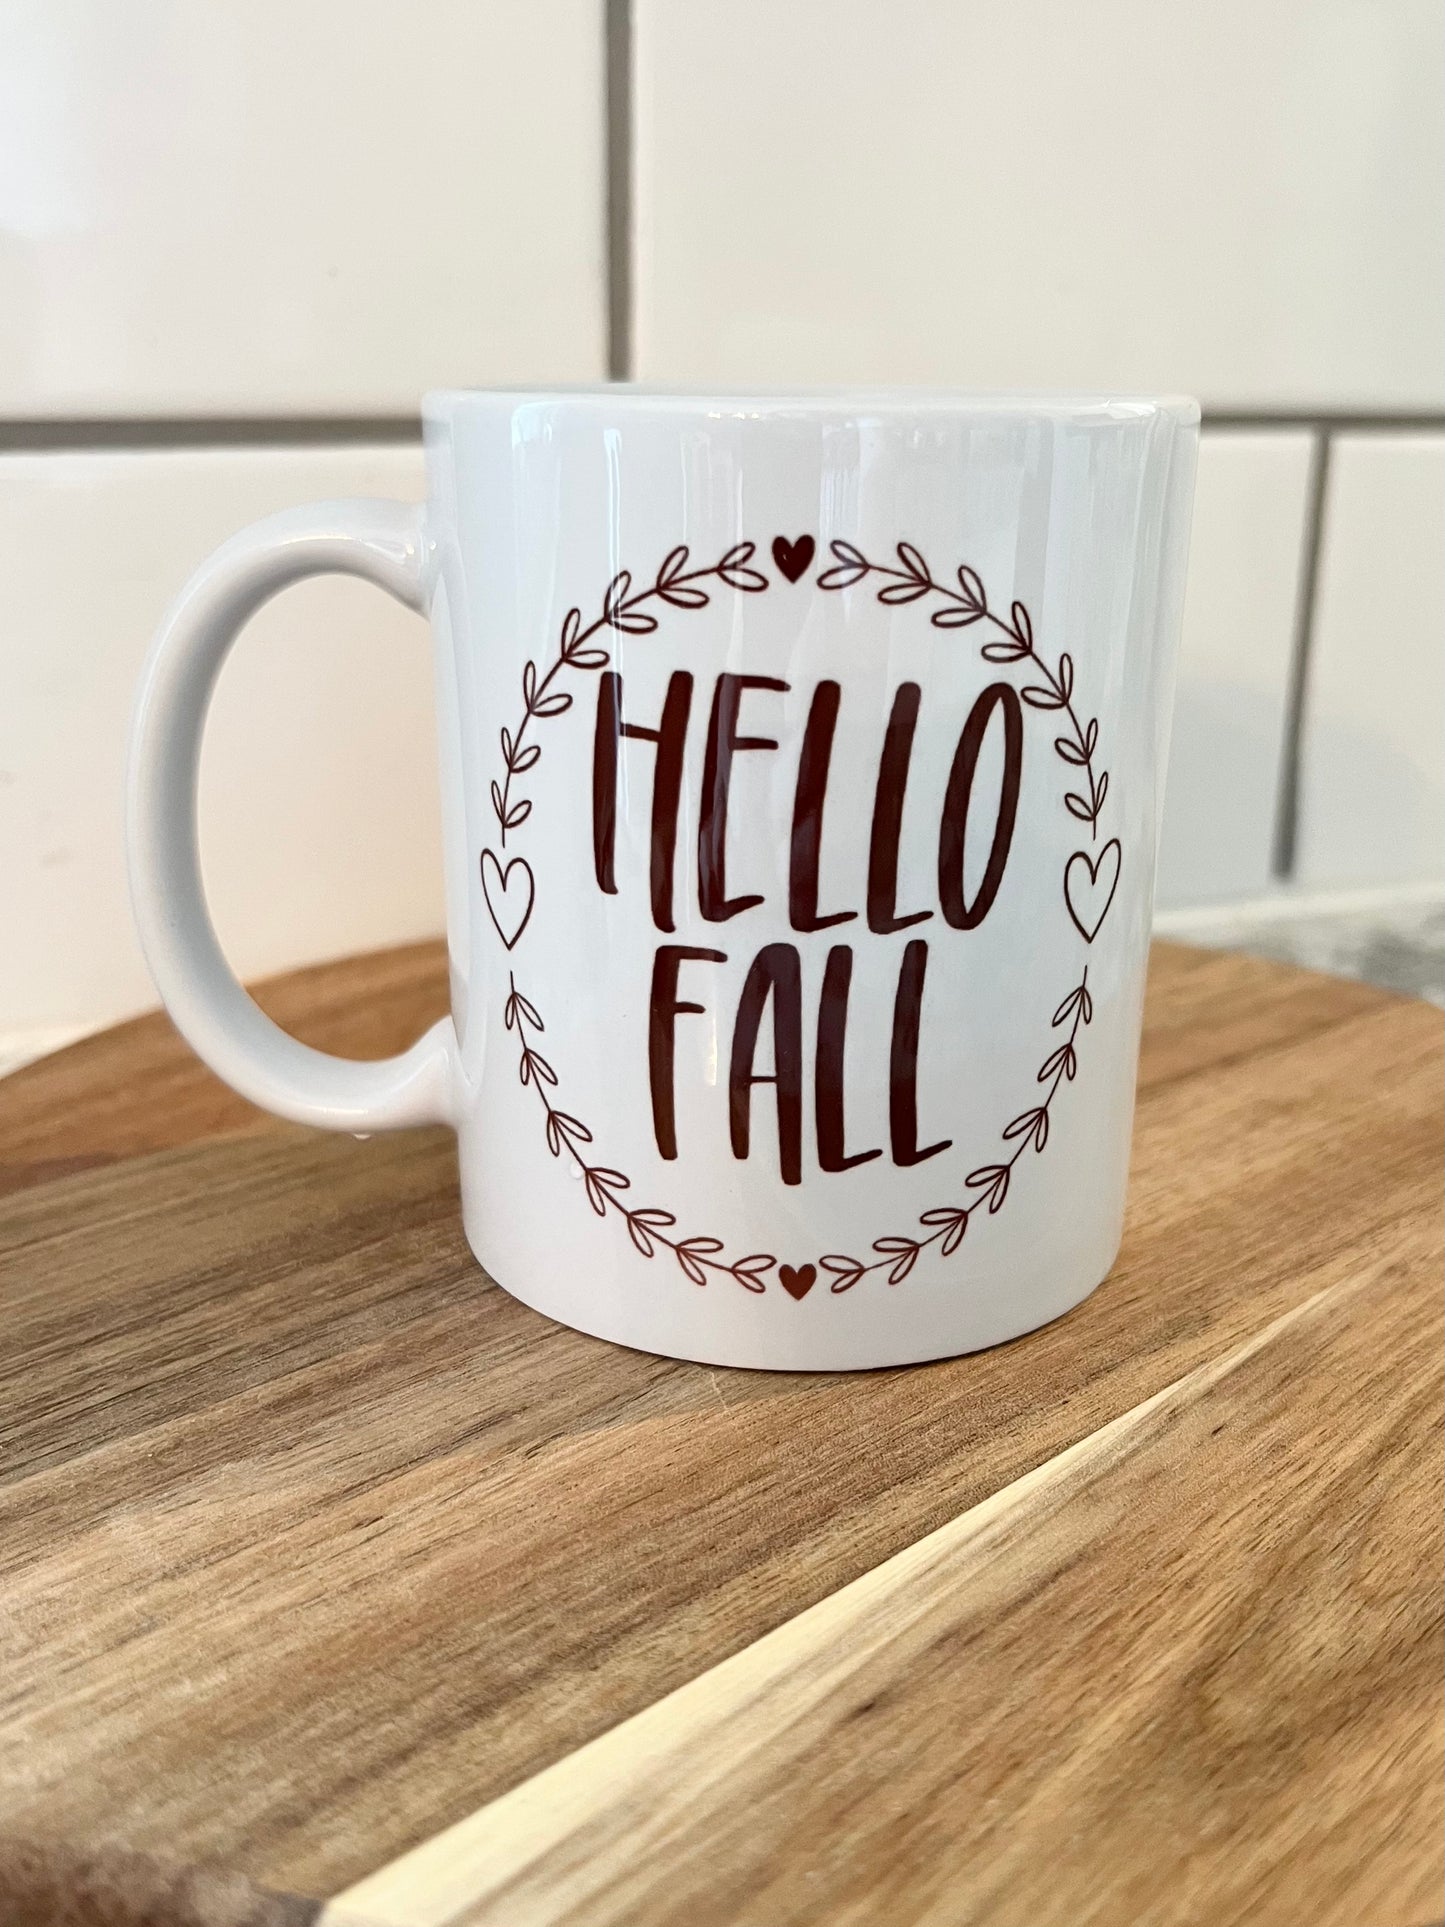 Hello Fall coffee mug